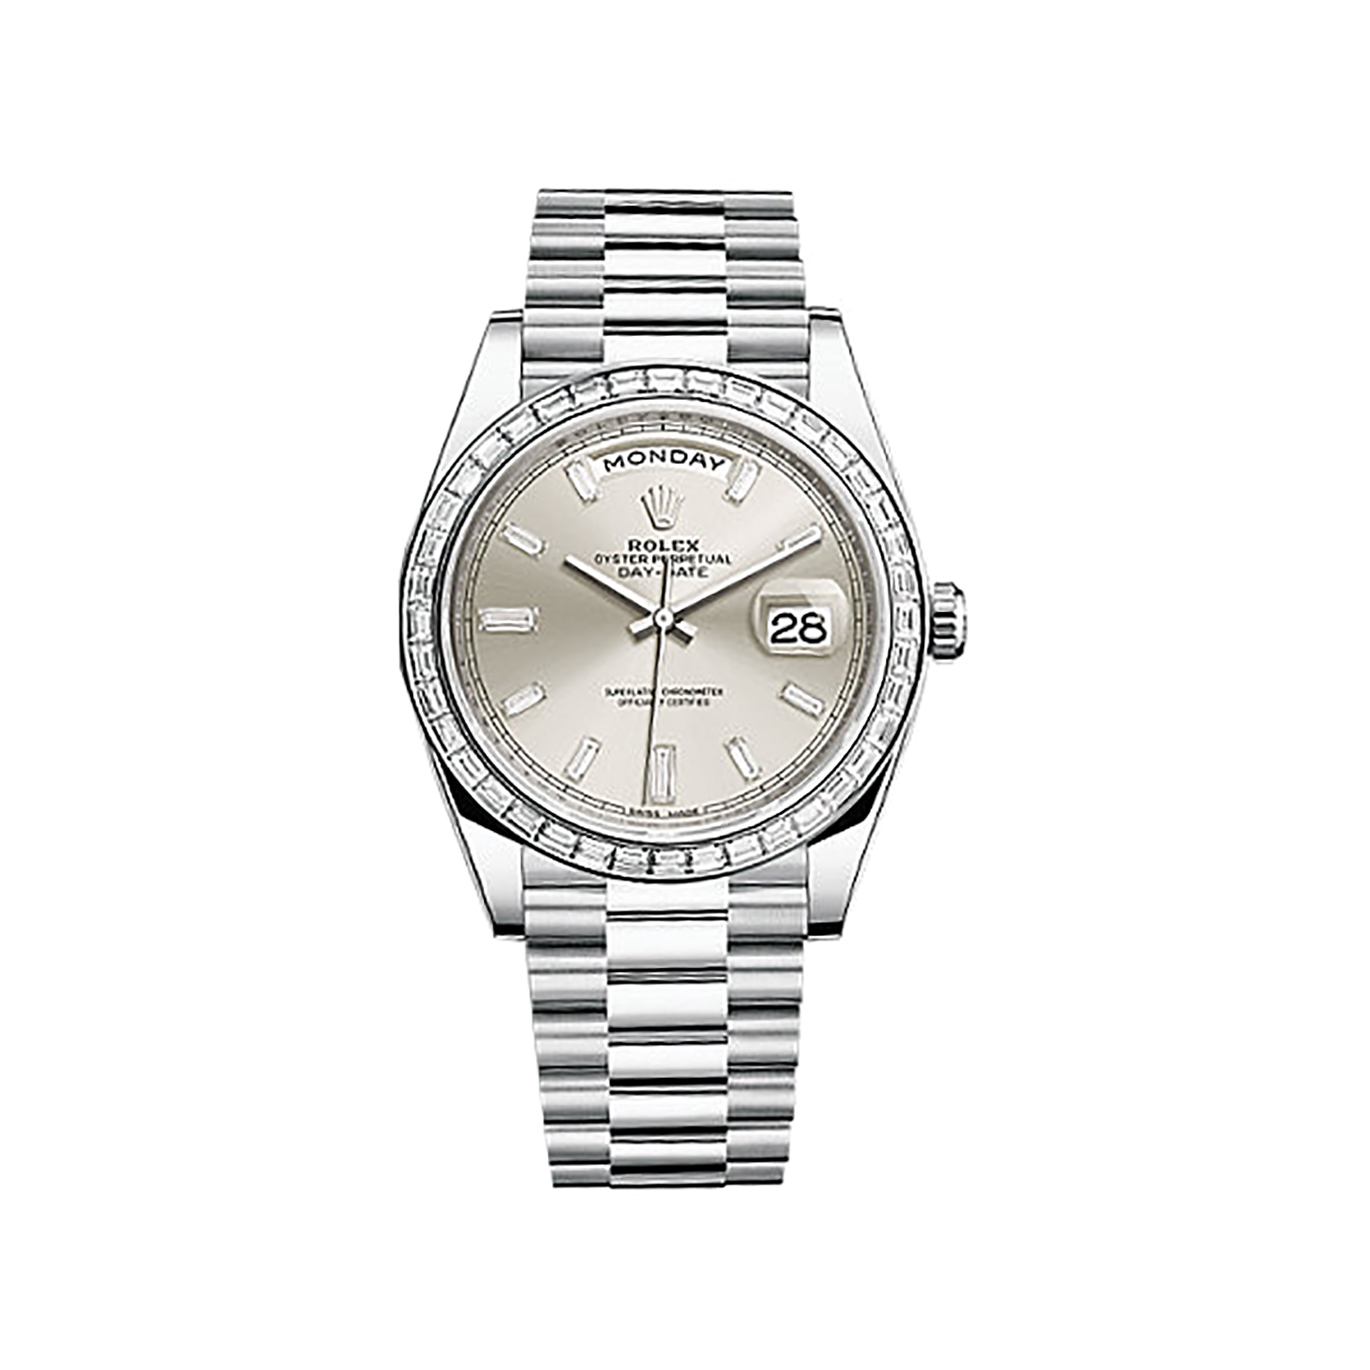 Day-Date 40 228396TBR Platinum & Diamonds Watch (Silver Set with Diamonds)